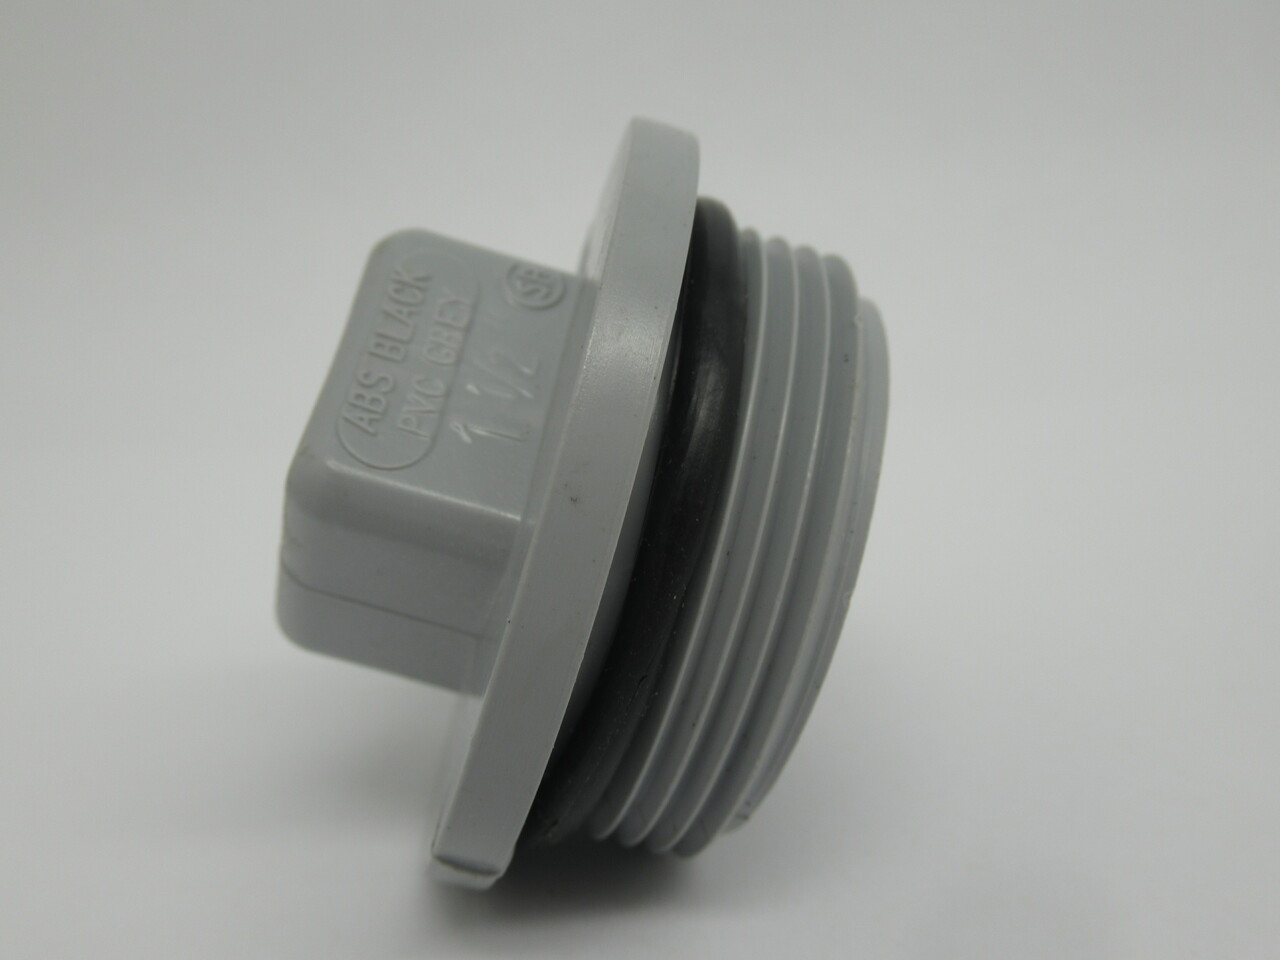 Ipex 26401 1-1/2" Grey Threaded Plug PVC DWV USED